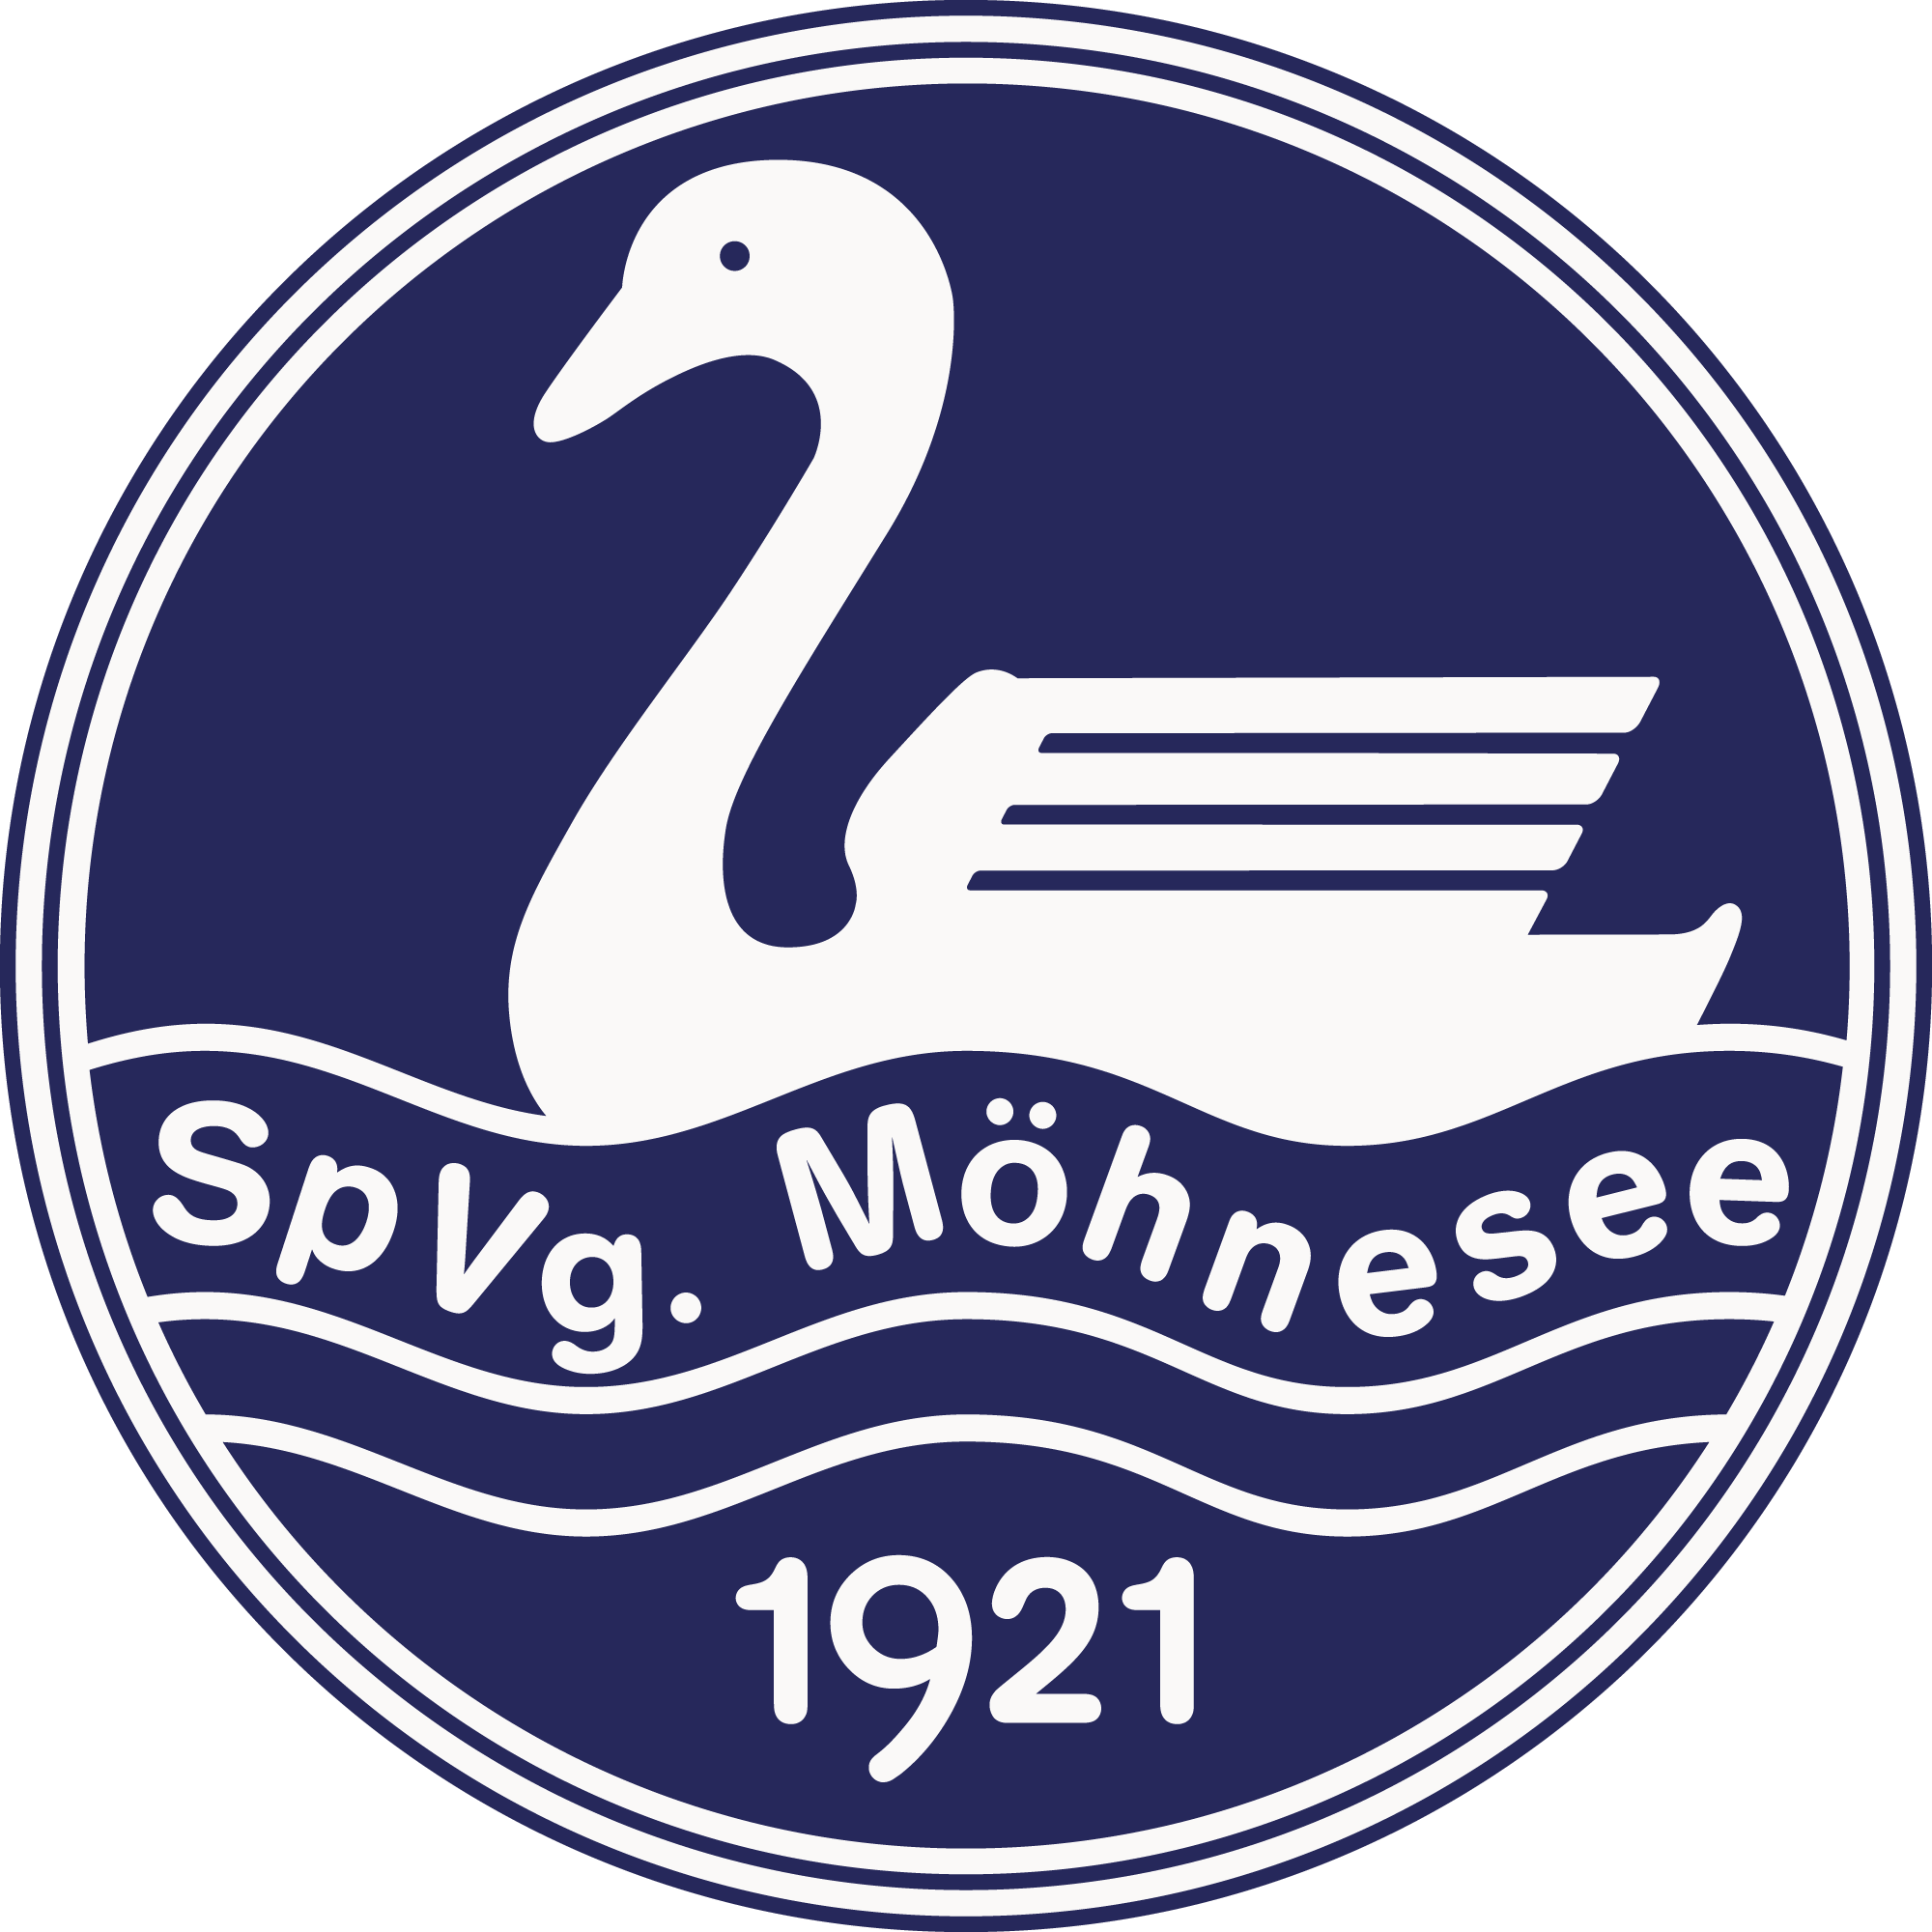 SpVg. Möhnesee Logo 02.2017